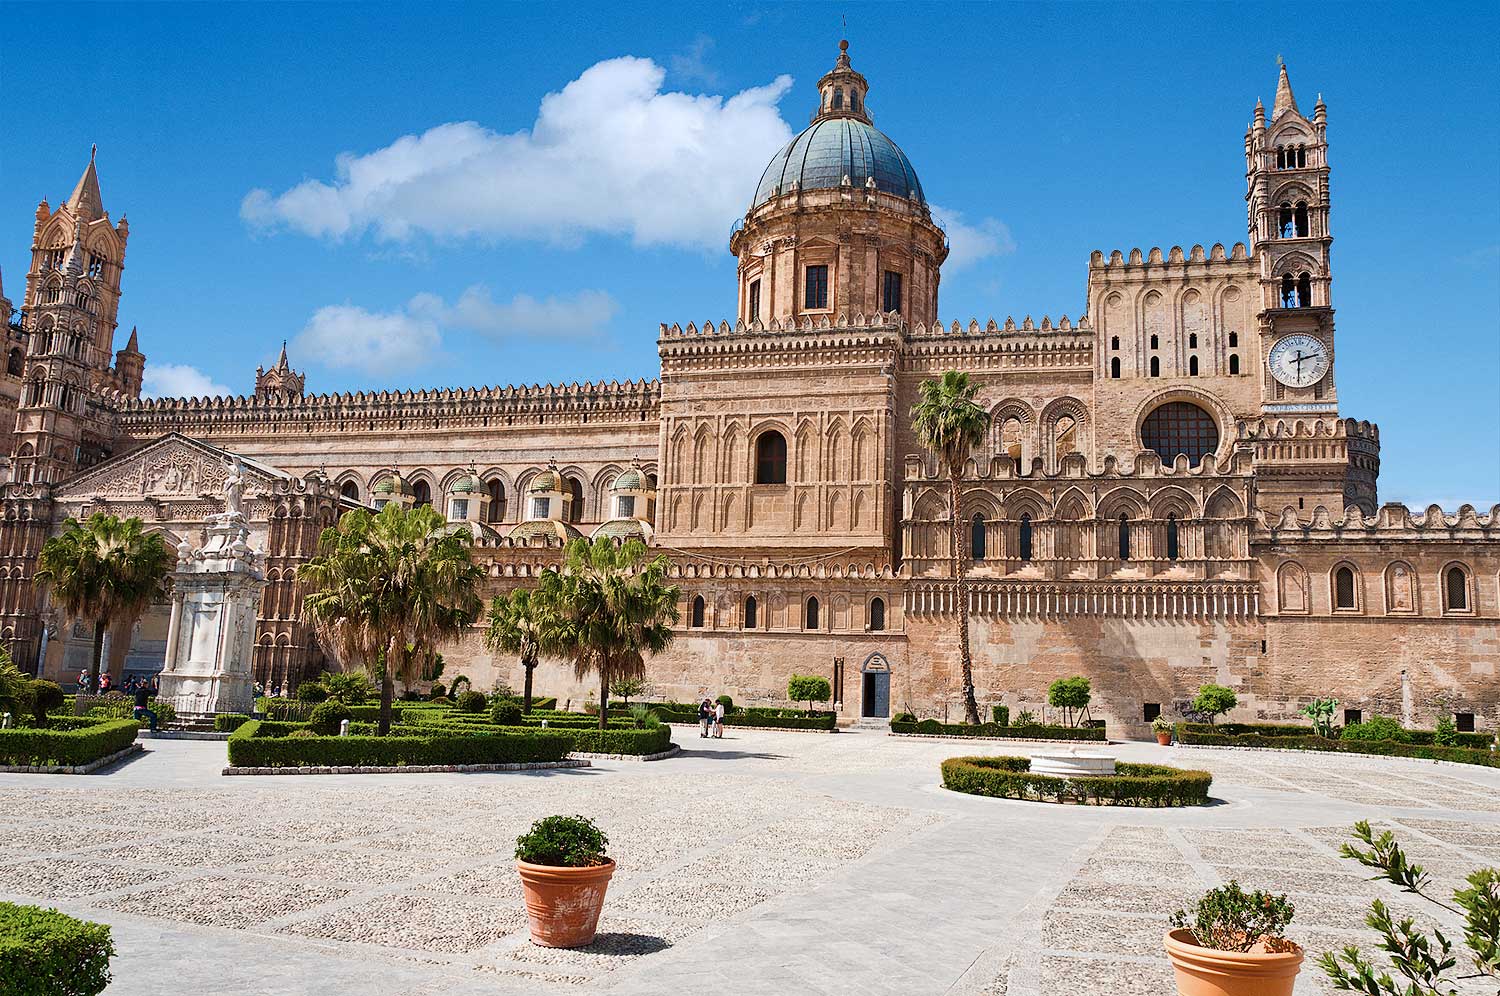 De kathedraal van Palermo